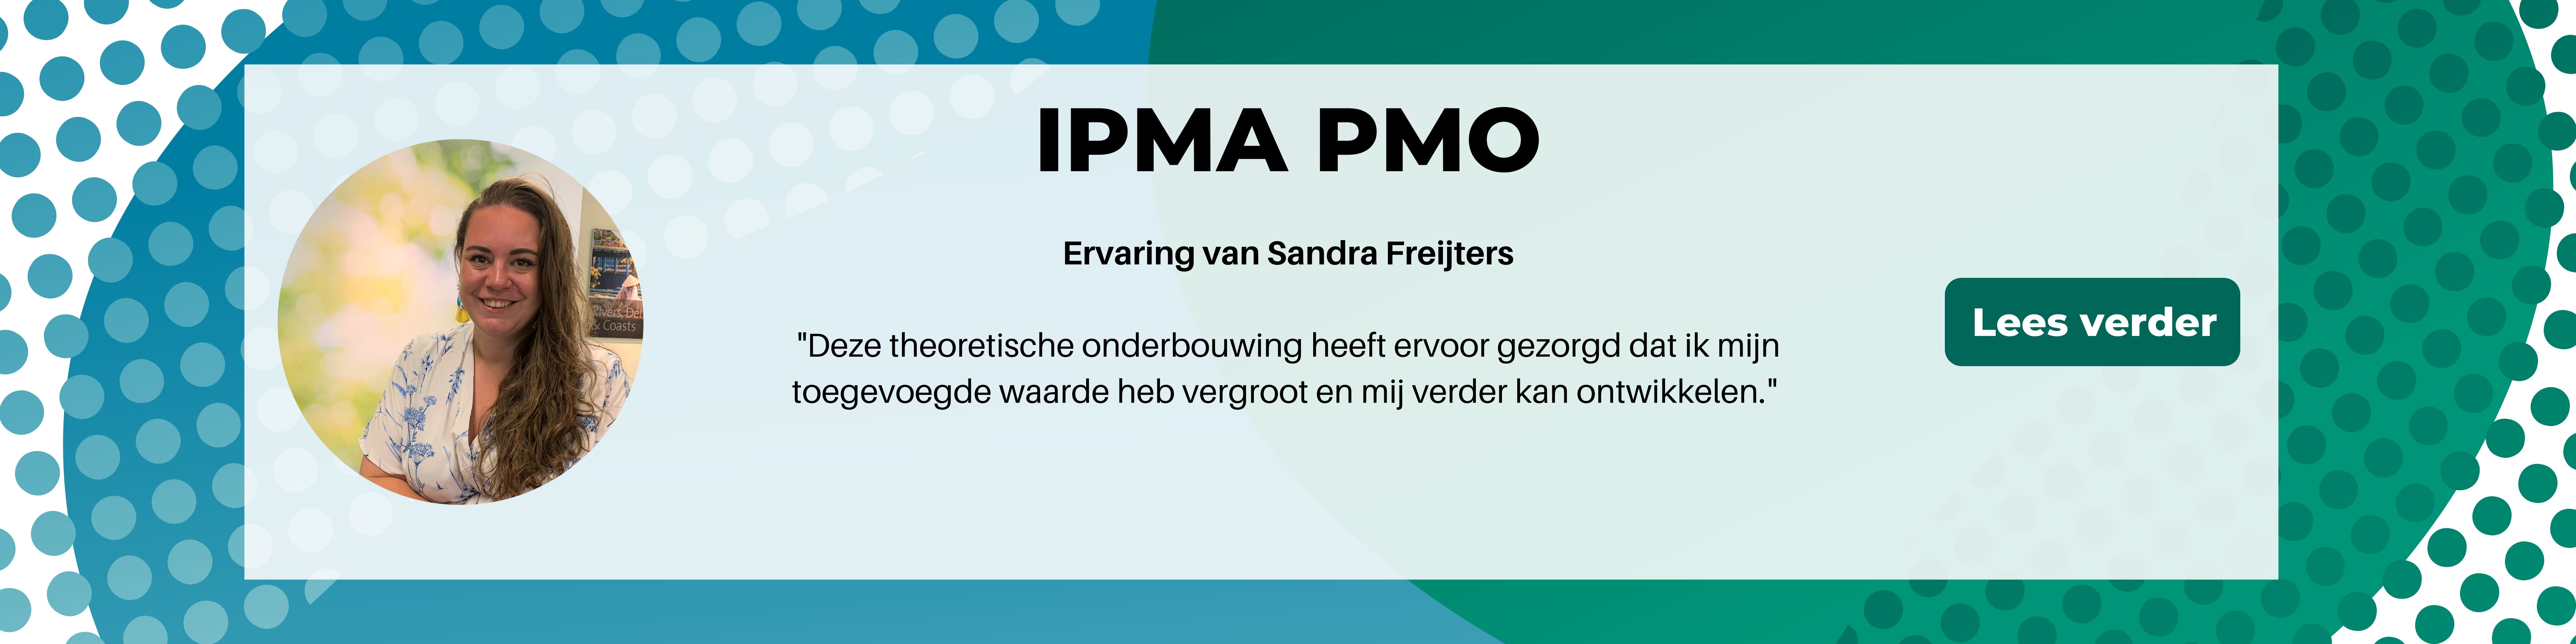 Ervaring IPMA PMO